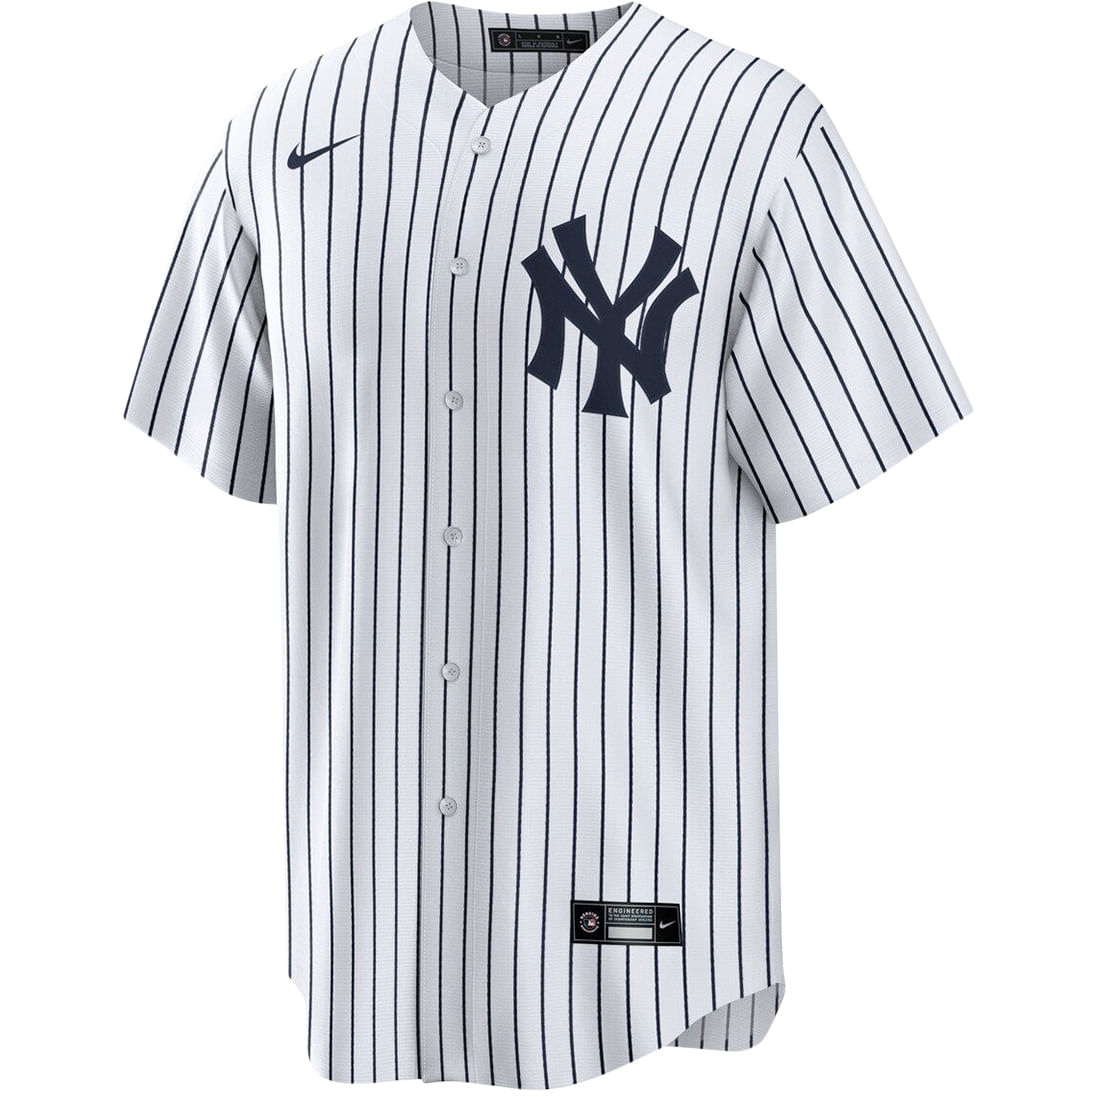 Nike Men's New York Yankees Black Cool Base Blank Jersey